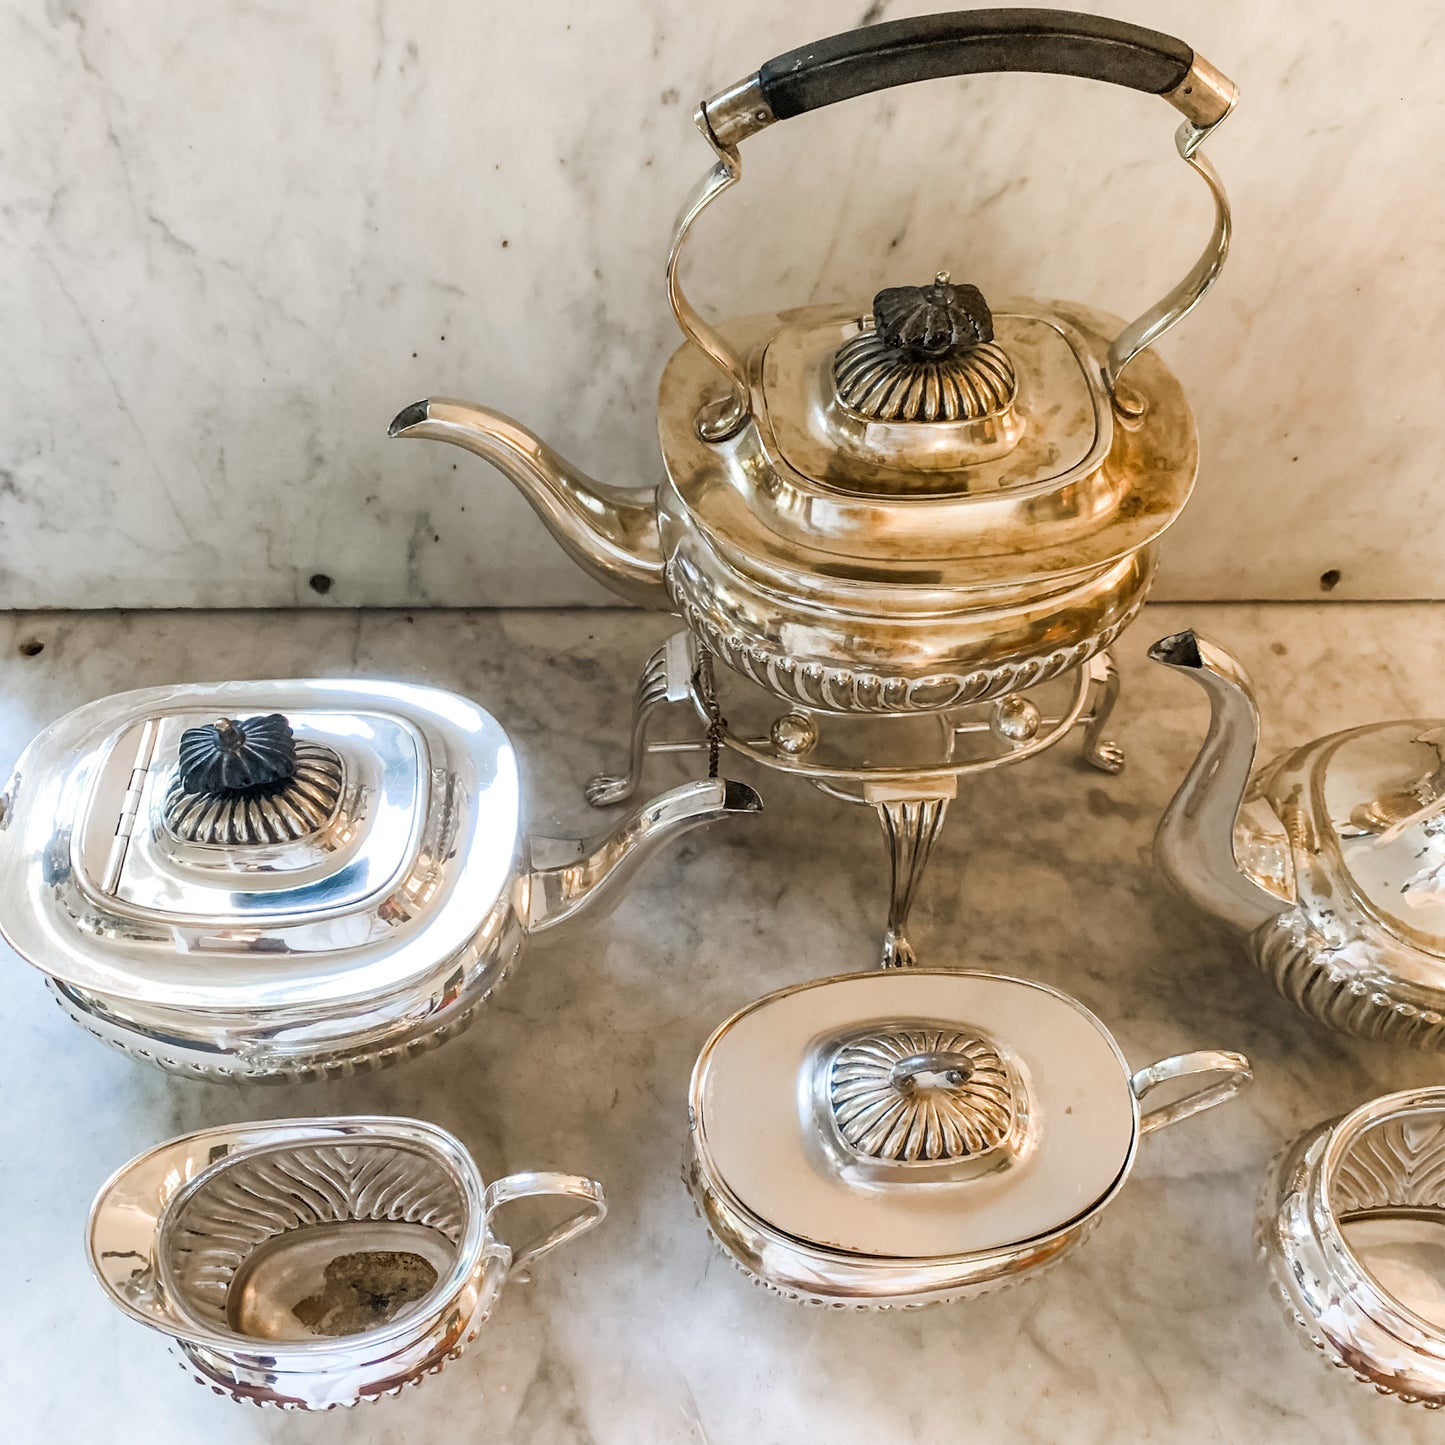 Stunning Antique Royal British Sheffield Tea And Coffee Set!